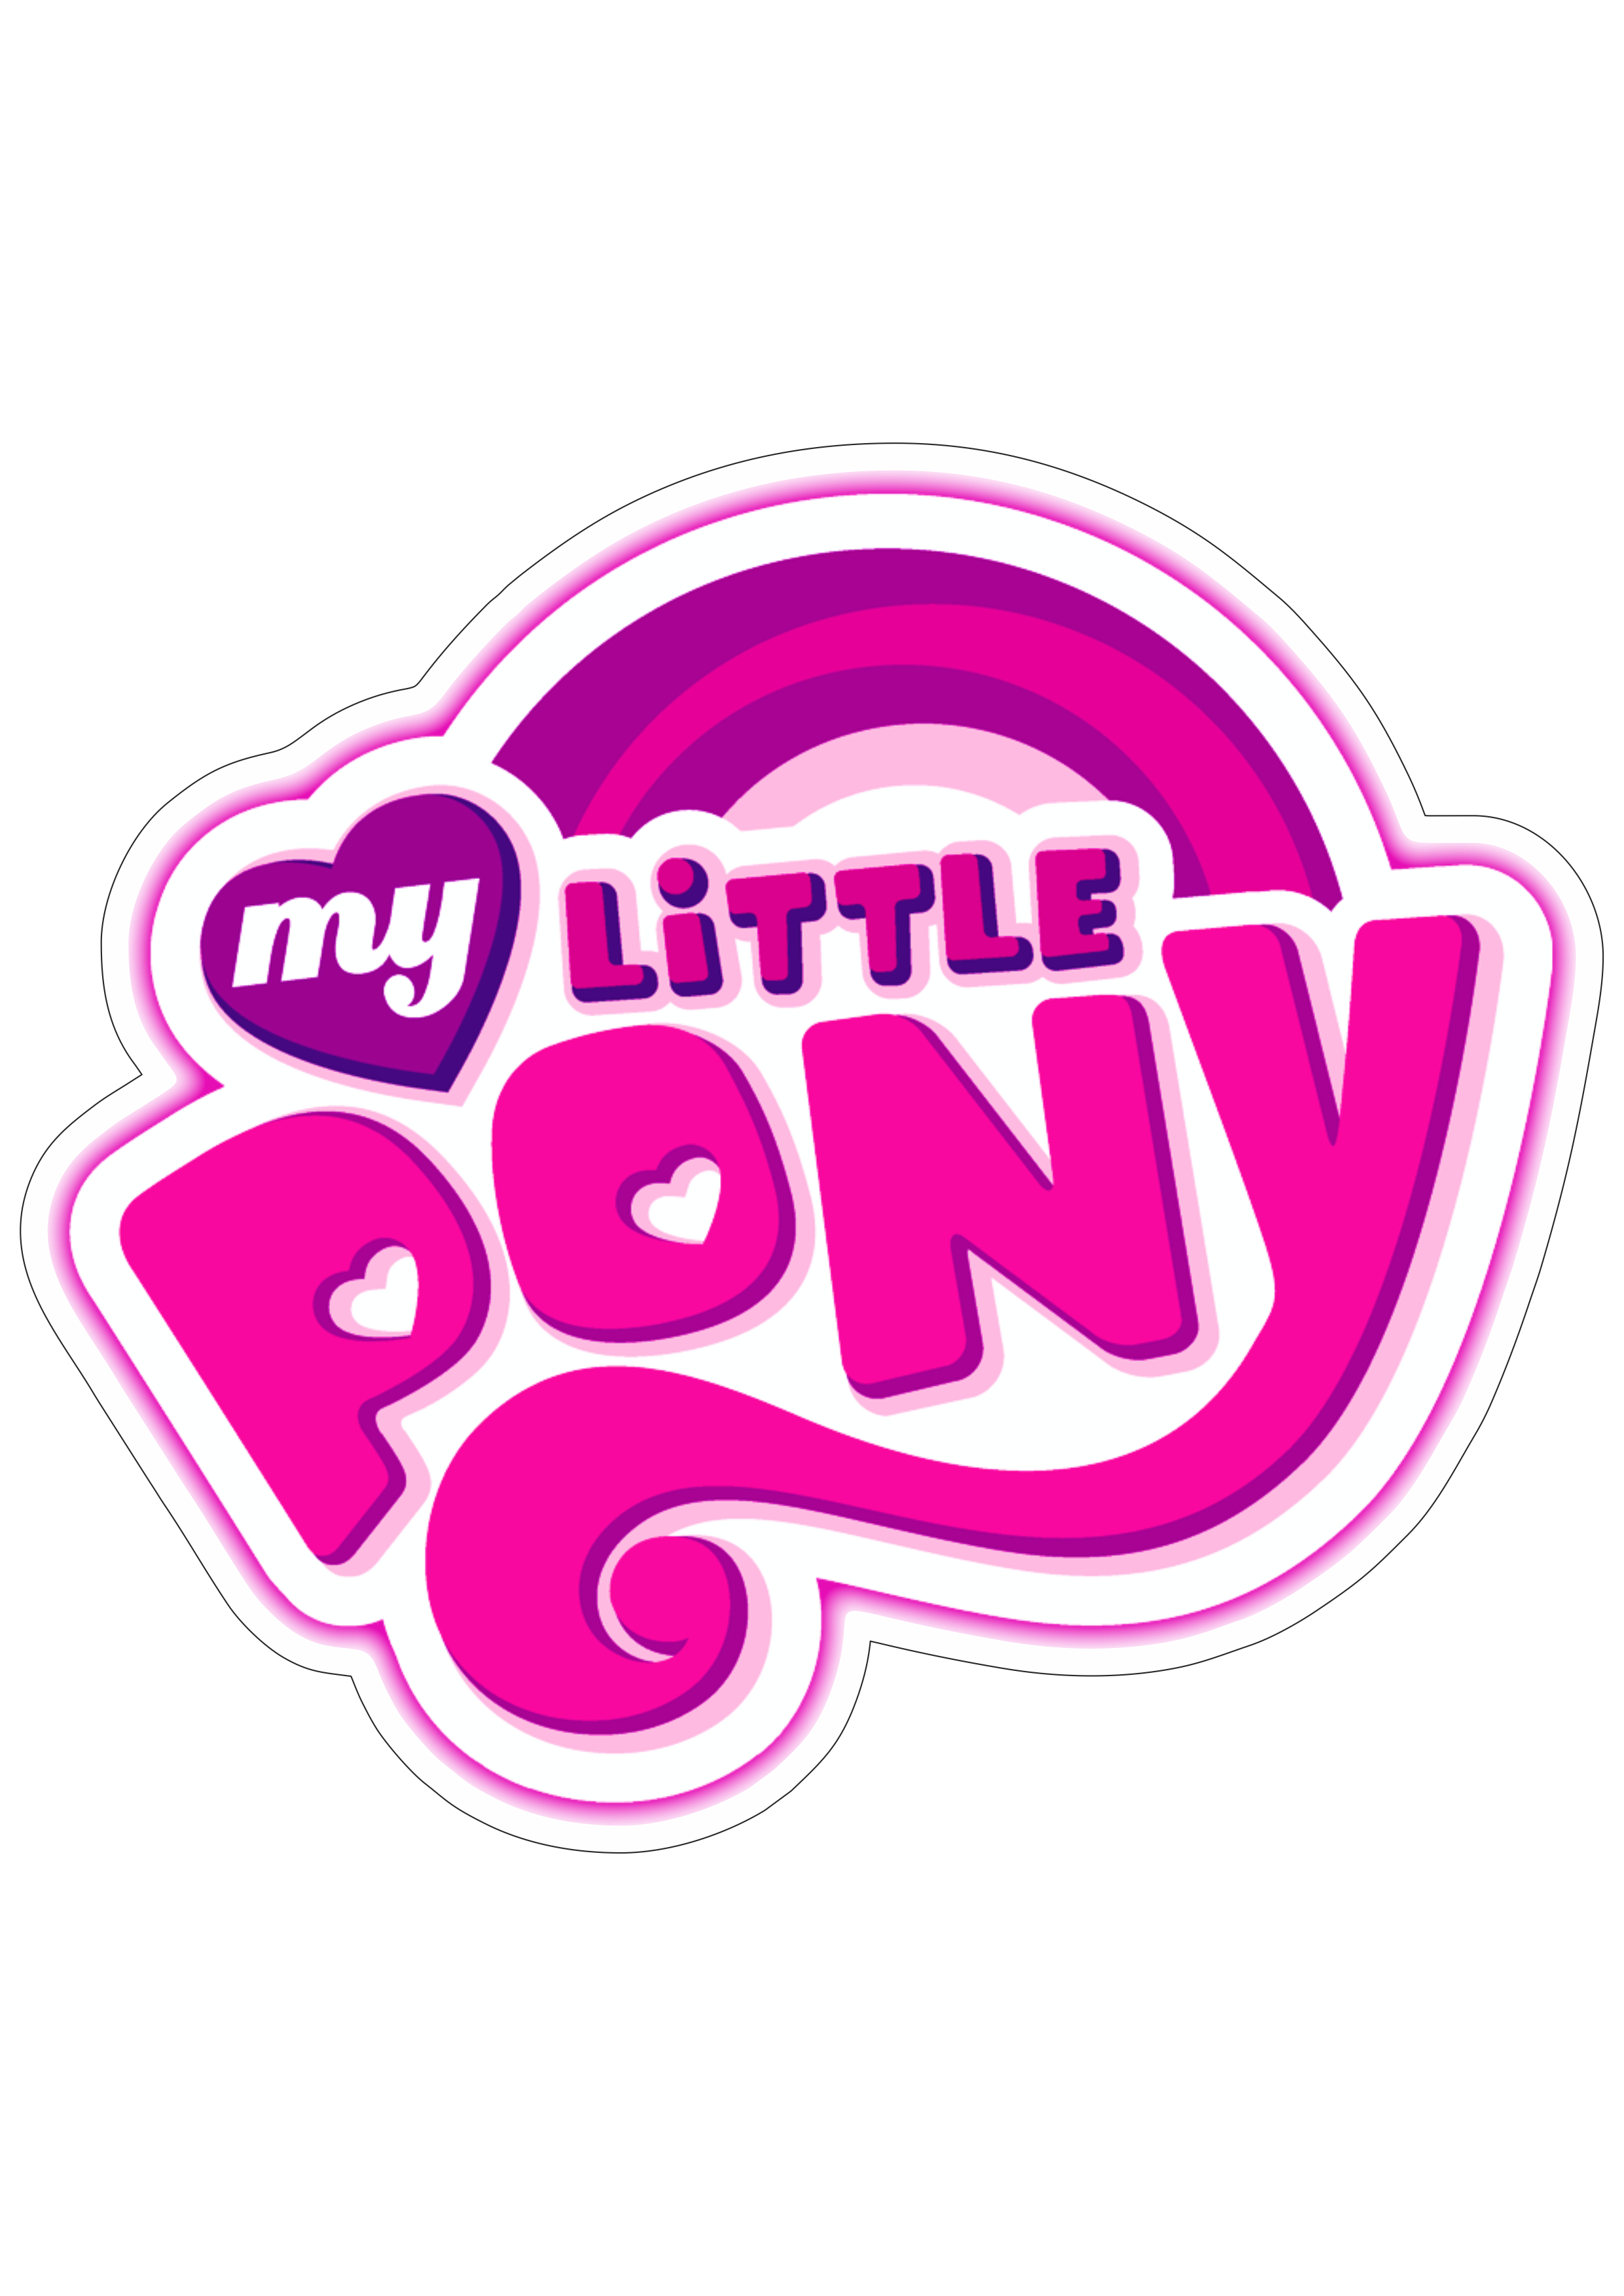 My little pony logo imagem png